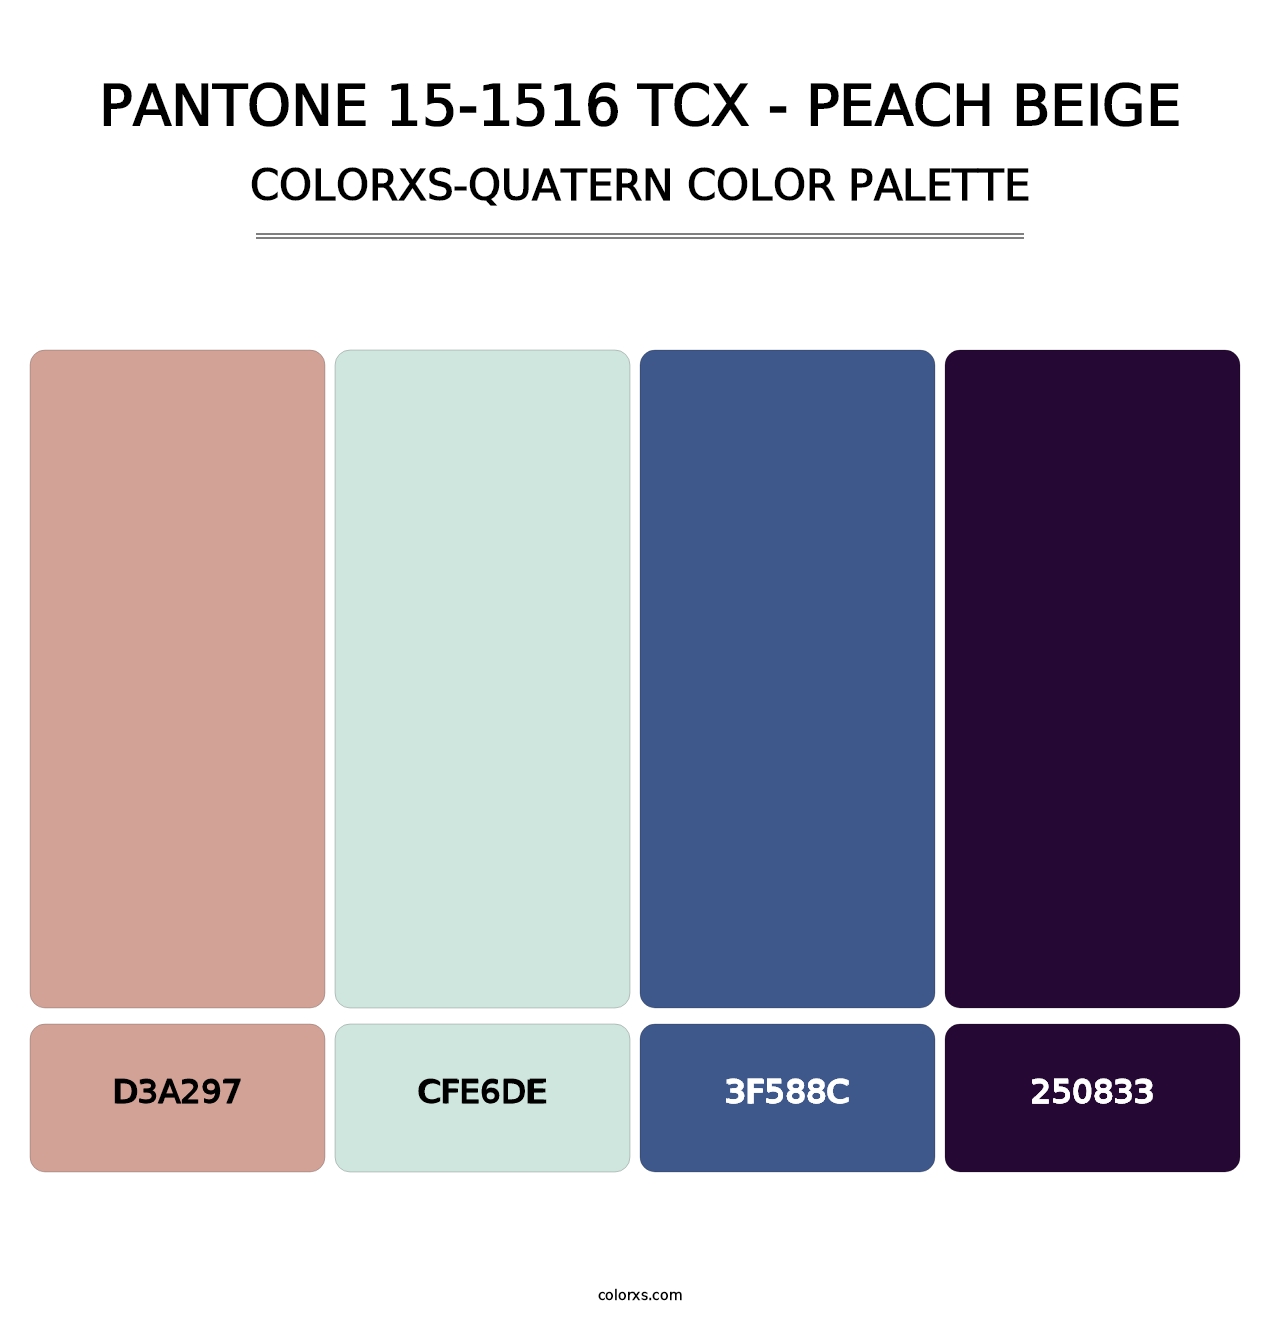 PANTONE 15-1516 TCX - Peach Beige - Colorxs Quatern Palette